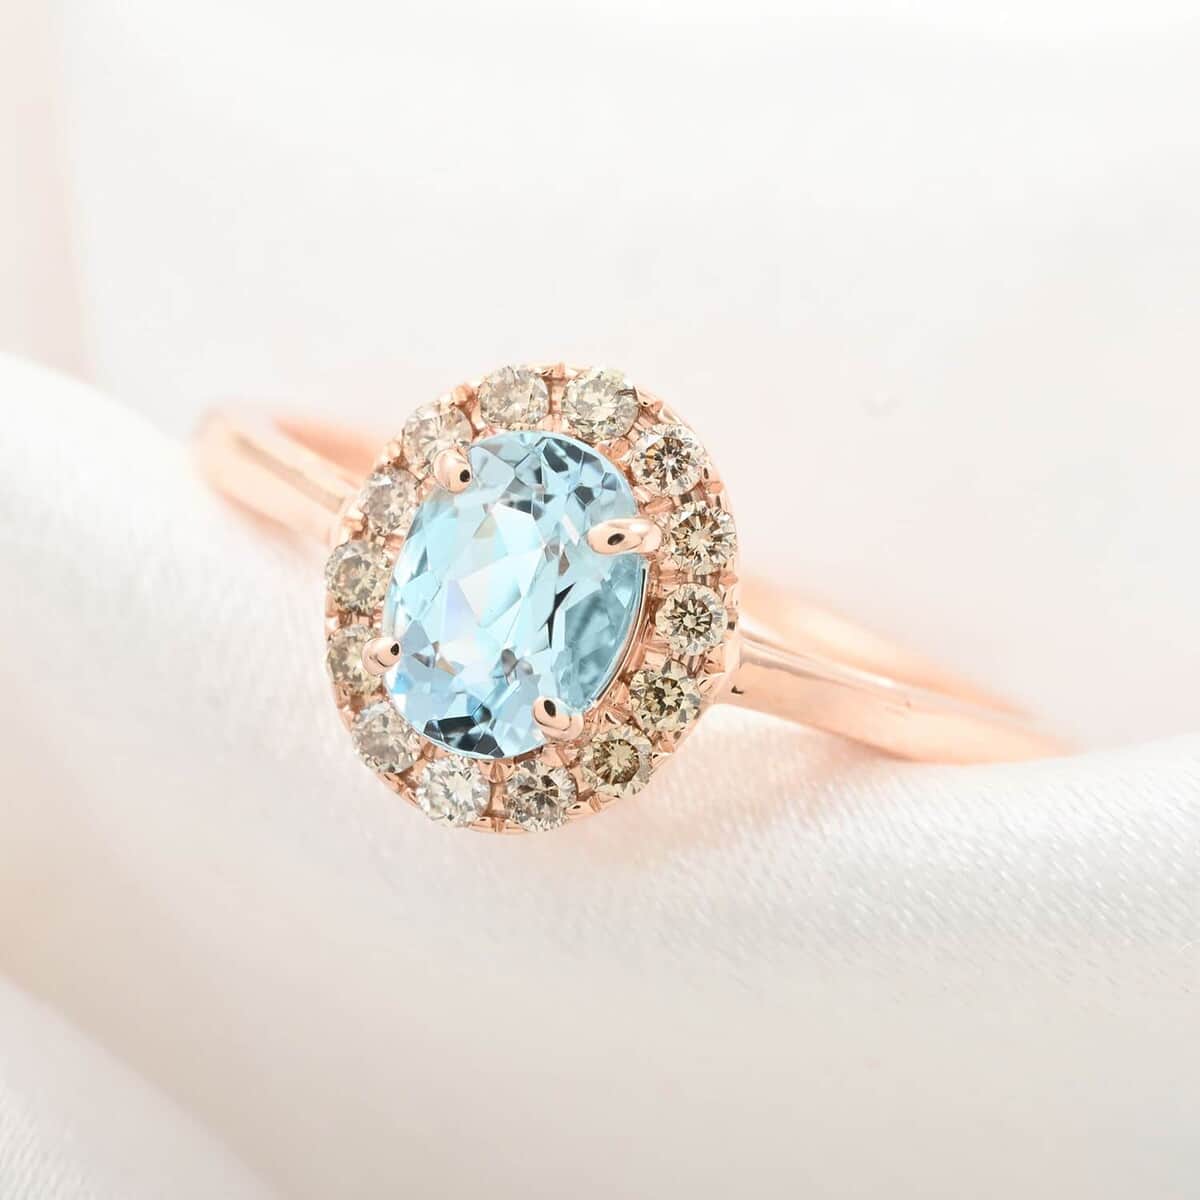 Luxoro 14K Rose Gold AAA Santa Maria Aquamarine, Diamond (G-H, I2) (0.24 cts) Ring (Size 6.0) 1.05 ctw image number 1